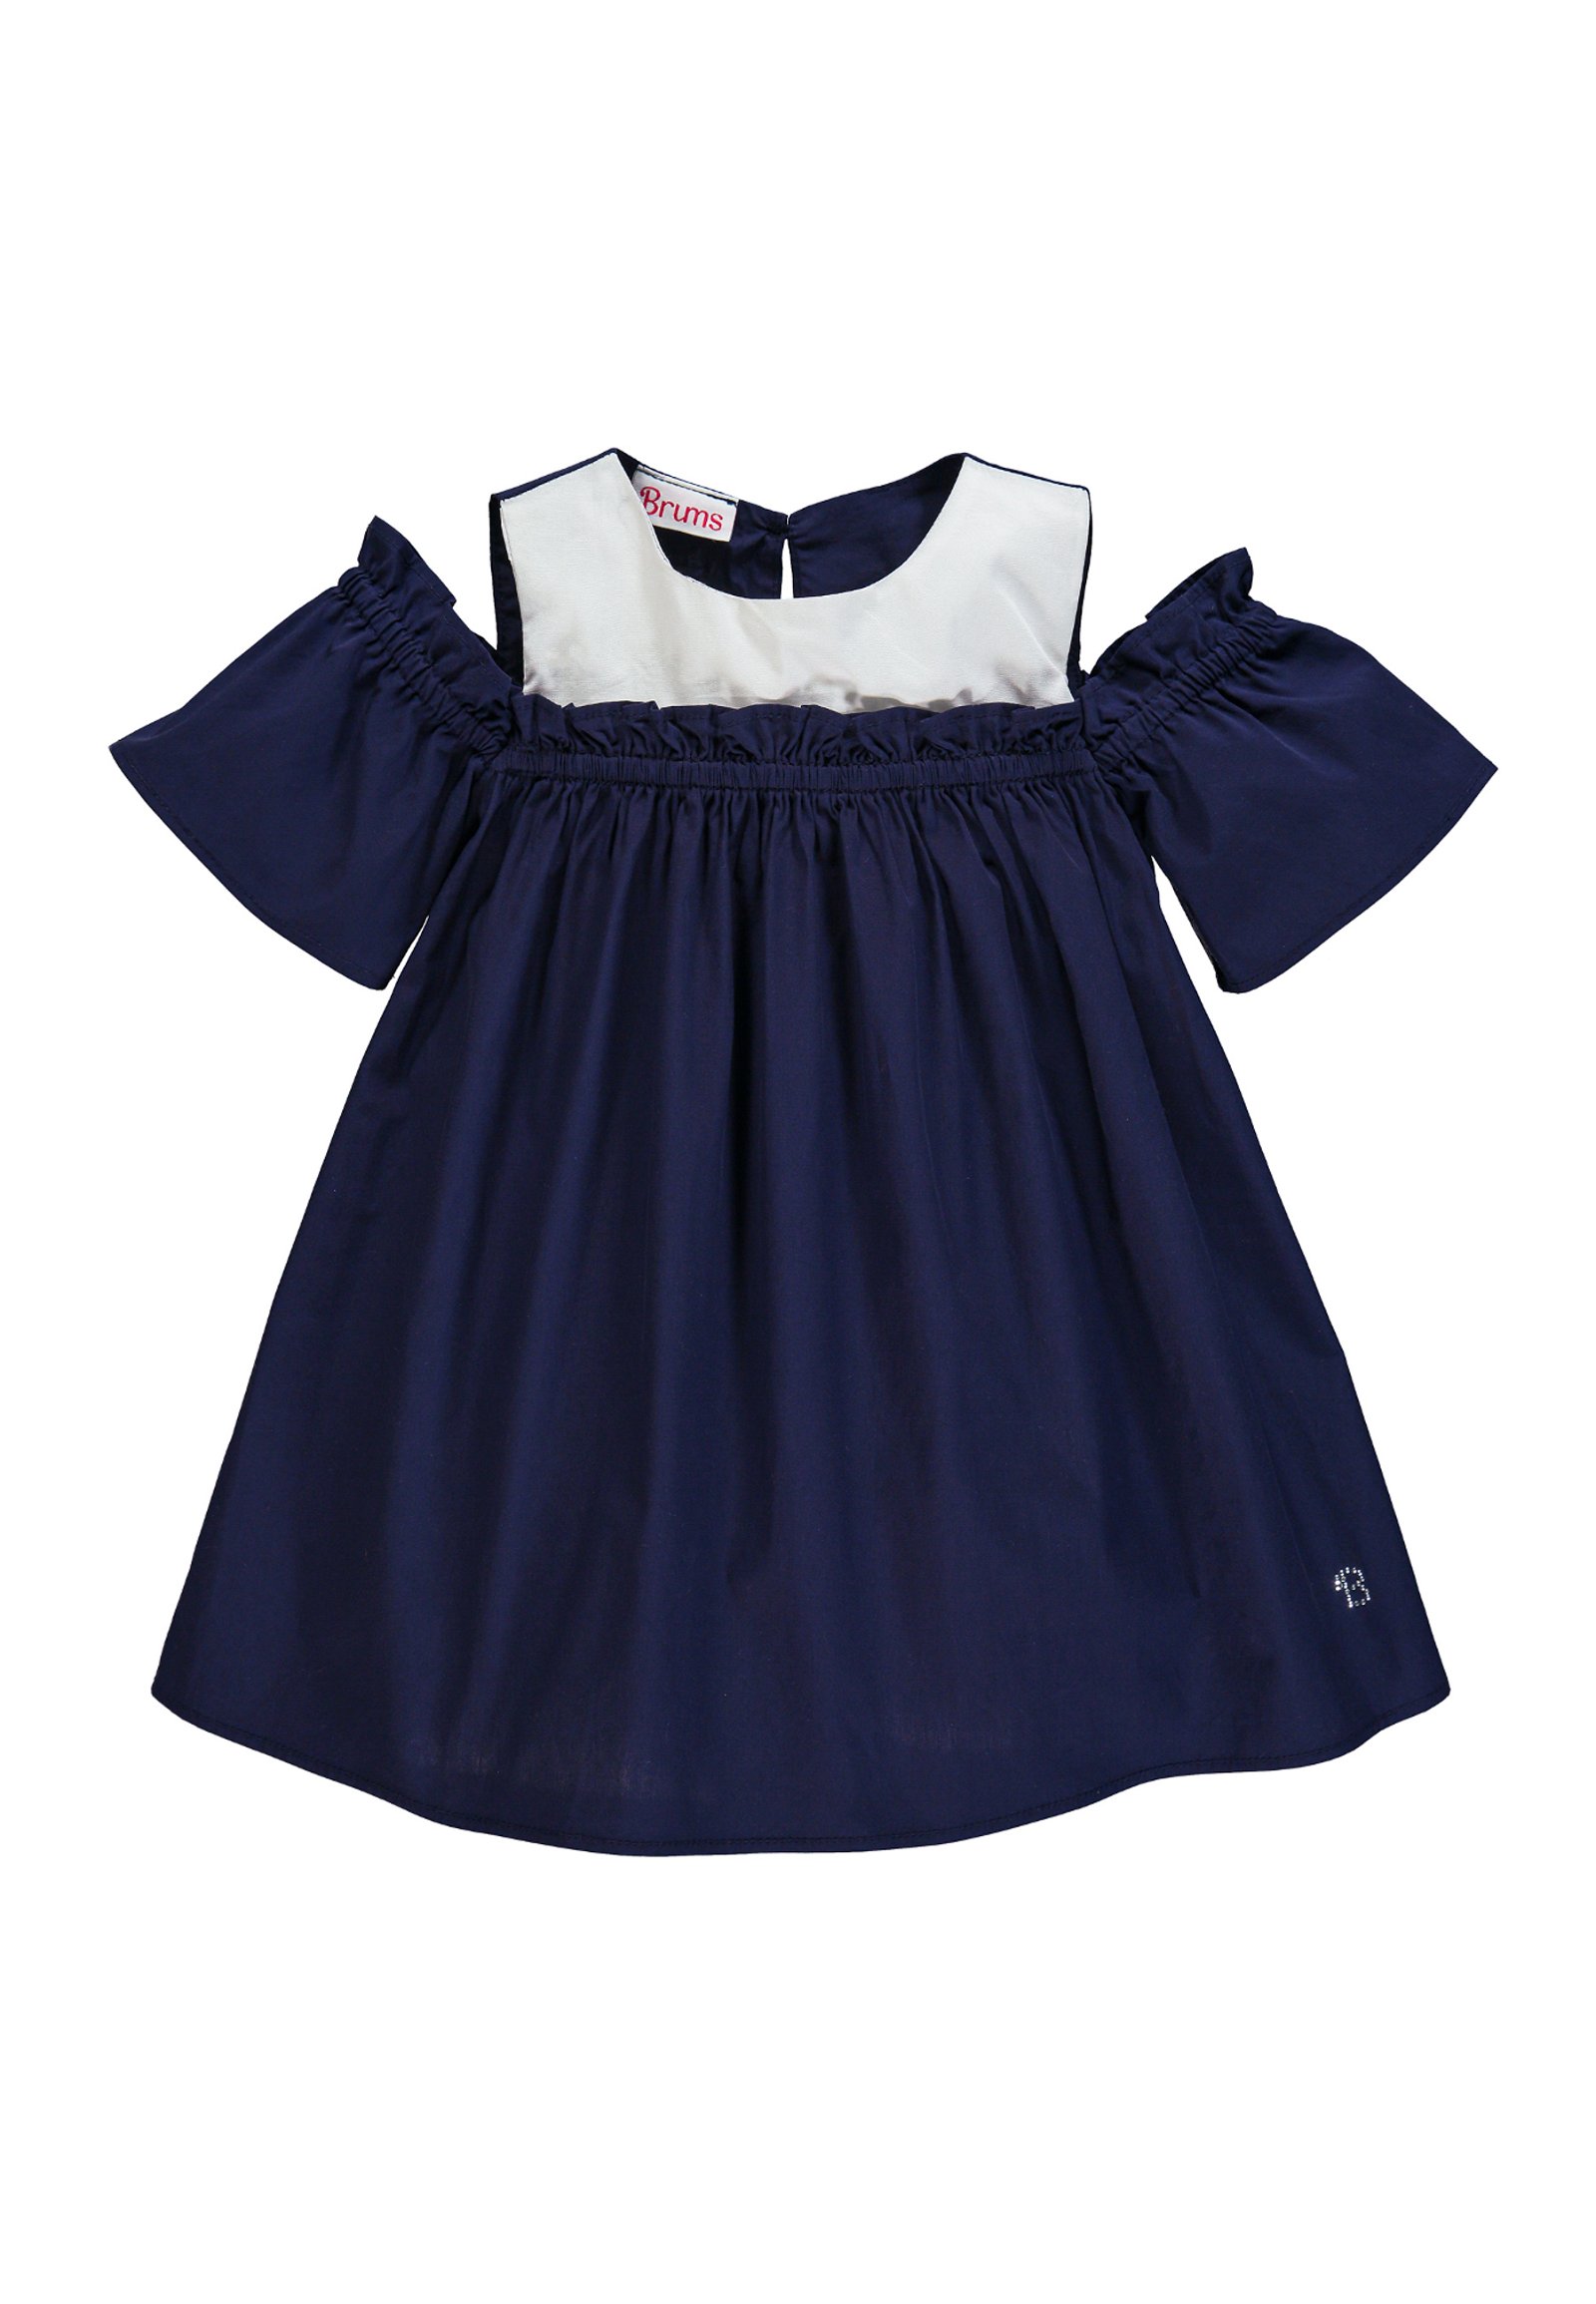 Brums Baby Girls' Abito Popeline Fantasia Dress